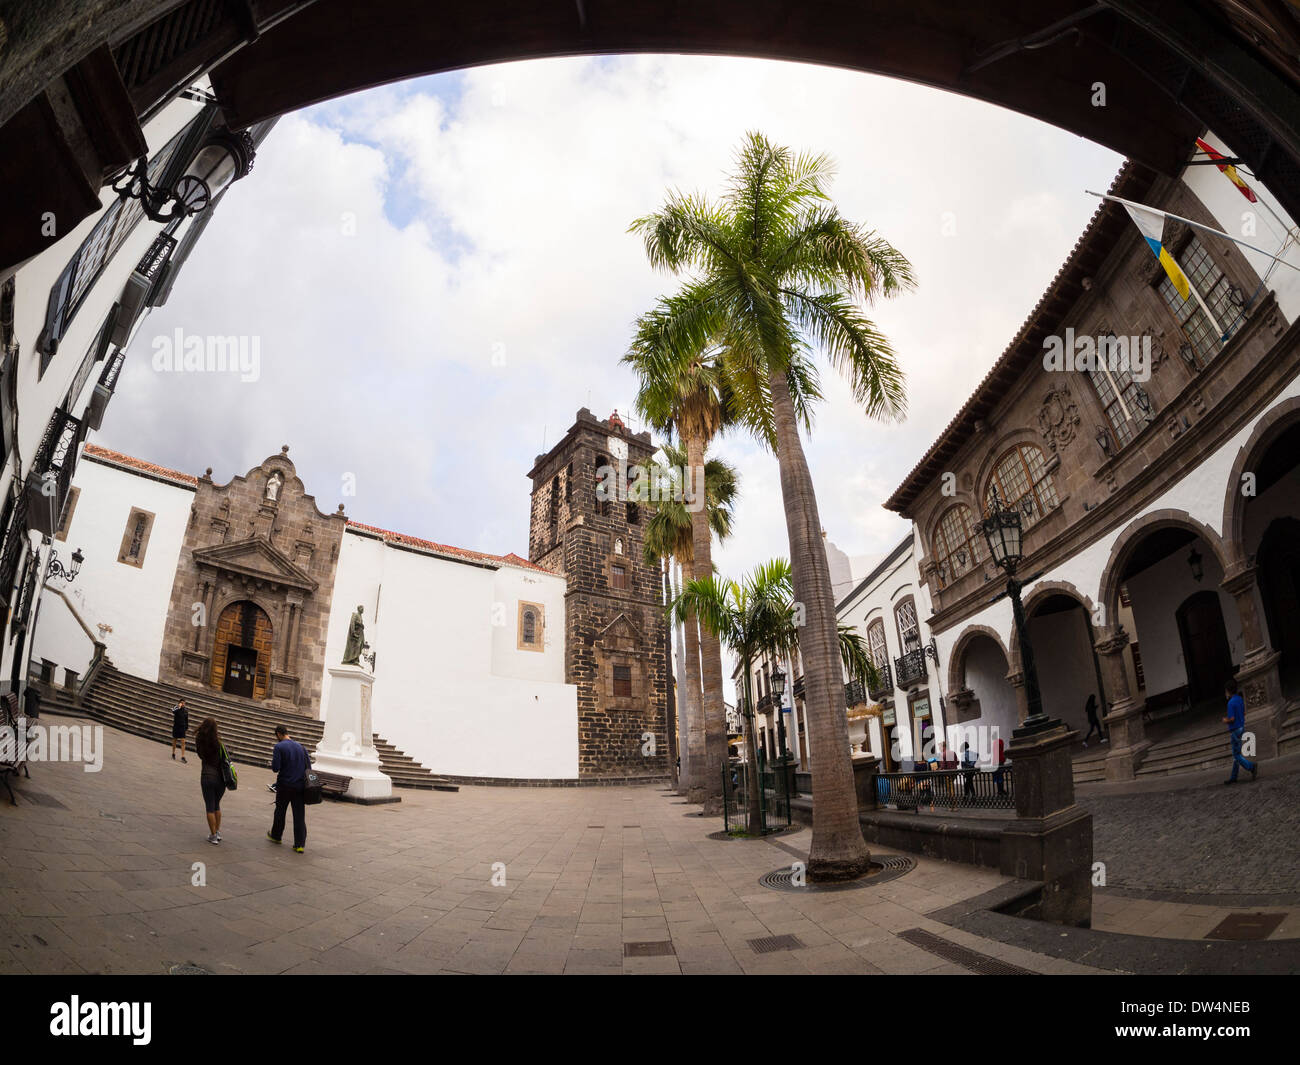 The church El Salvador at the Plaza Espana in Santa Cruz on the Canary Island La Palma Stock Photo